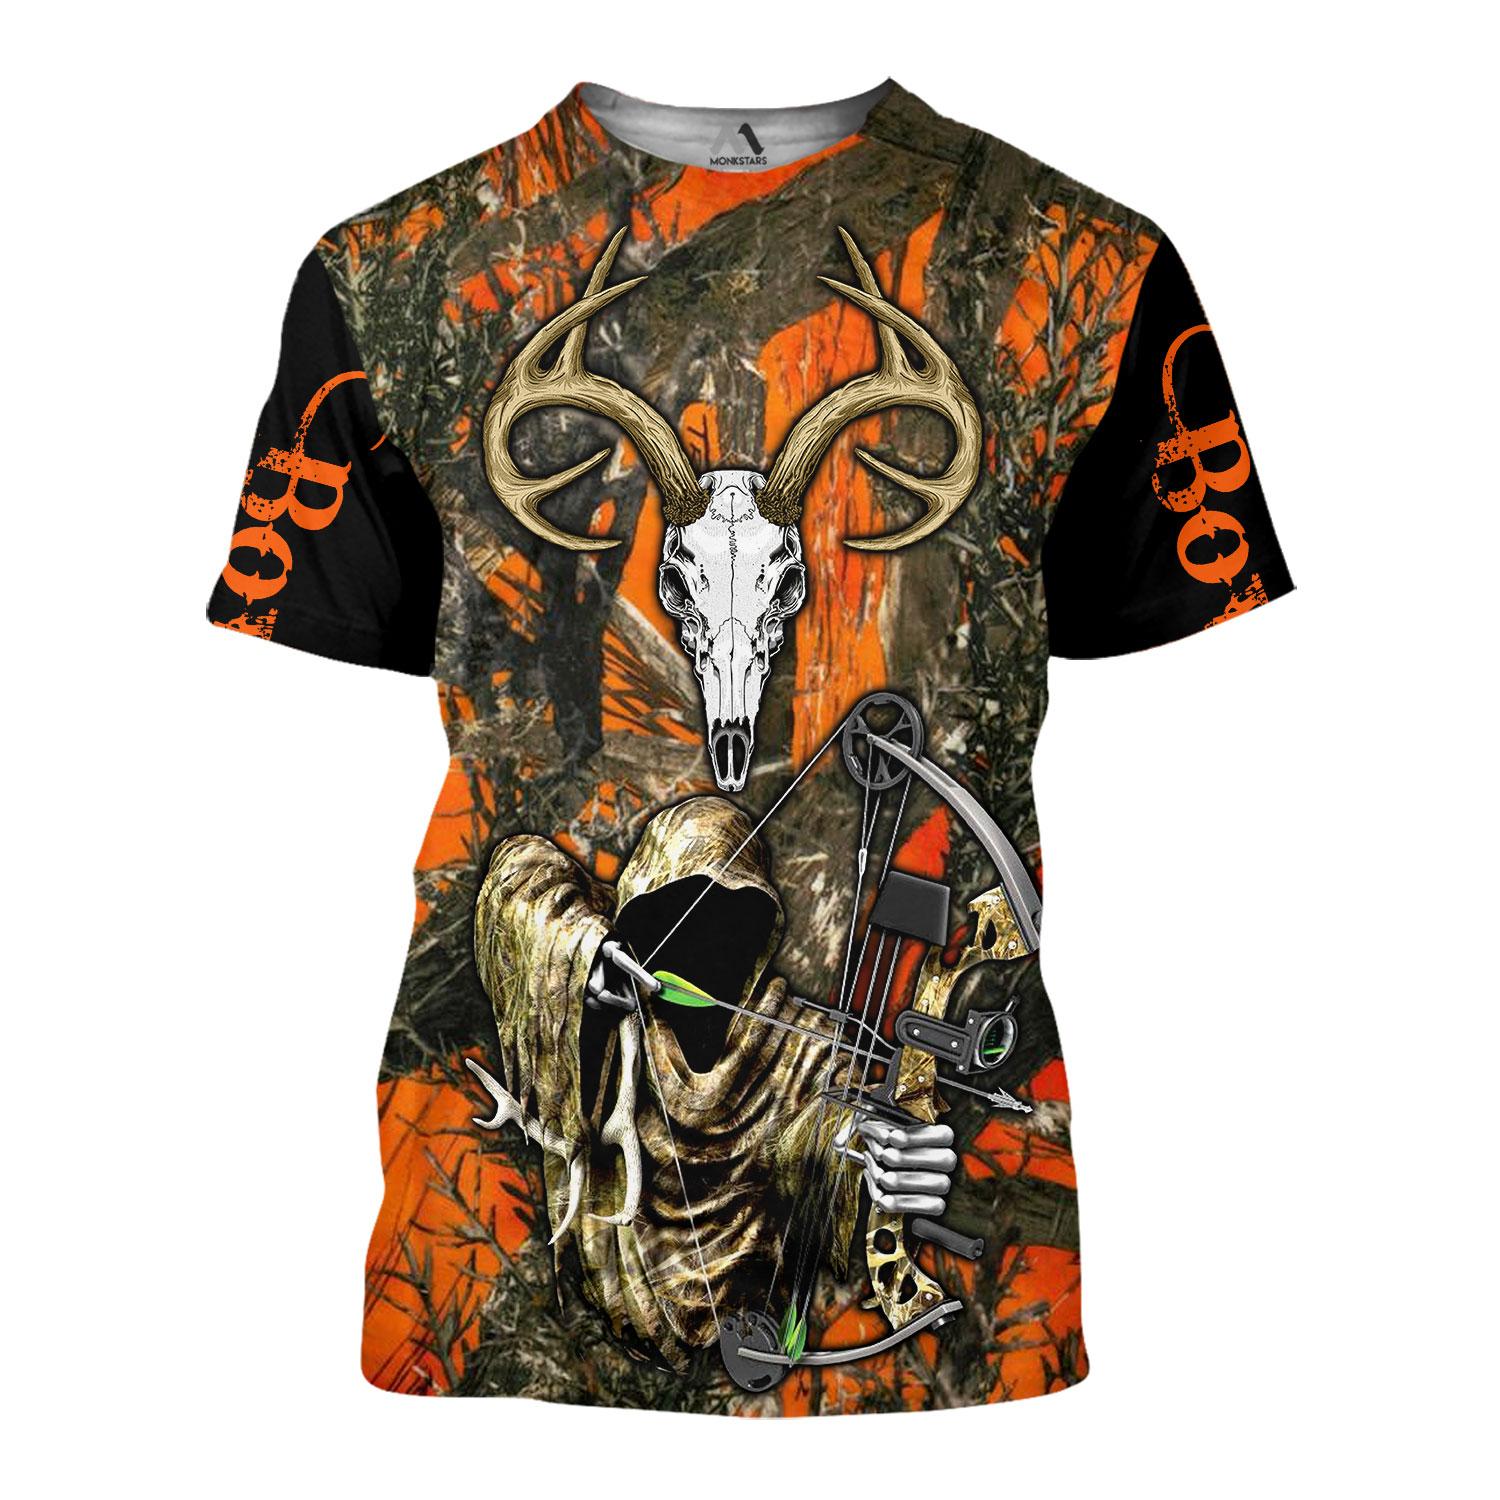 Grim reaper bow hunter camo 3d all over printed tshirt